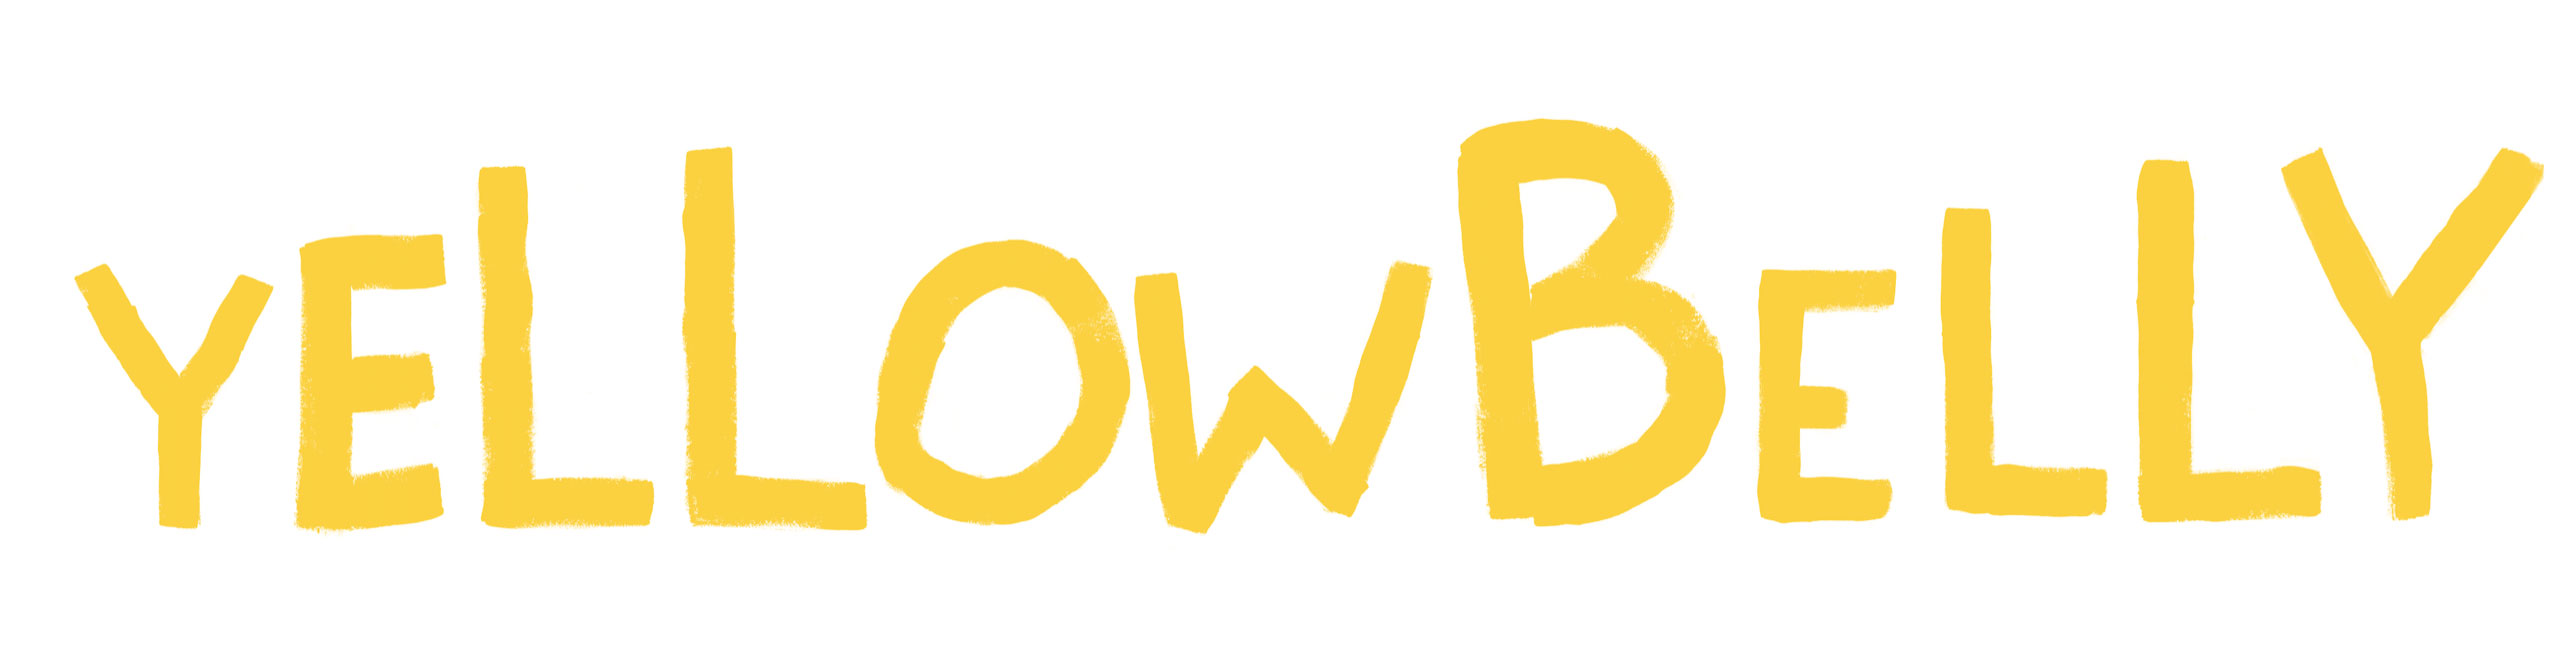 Yellowbelly logo concept Hand drawn